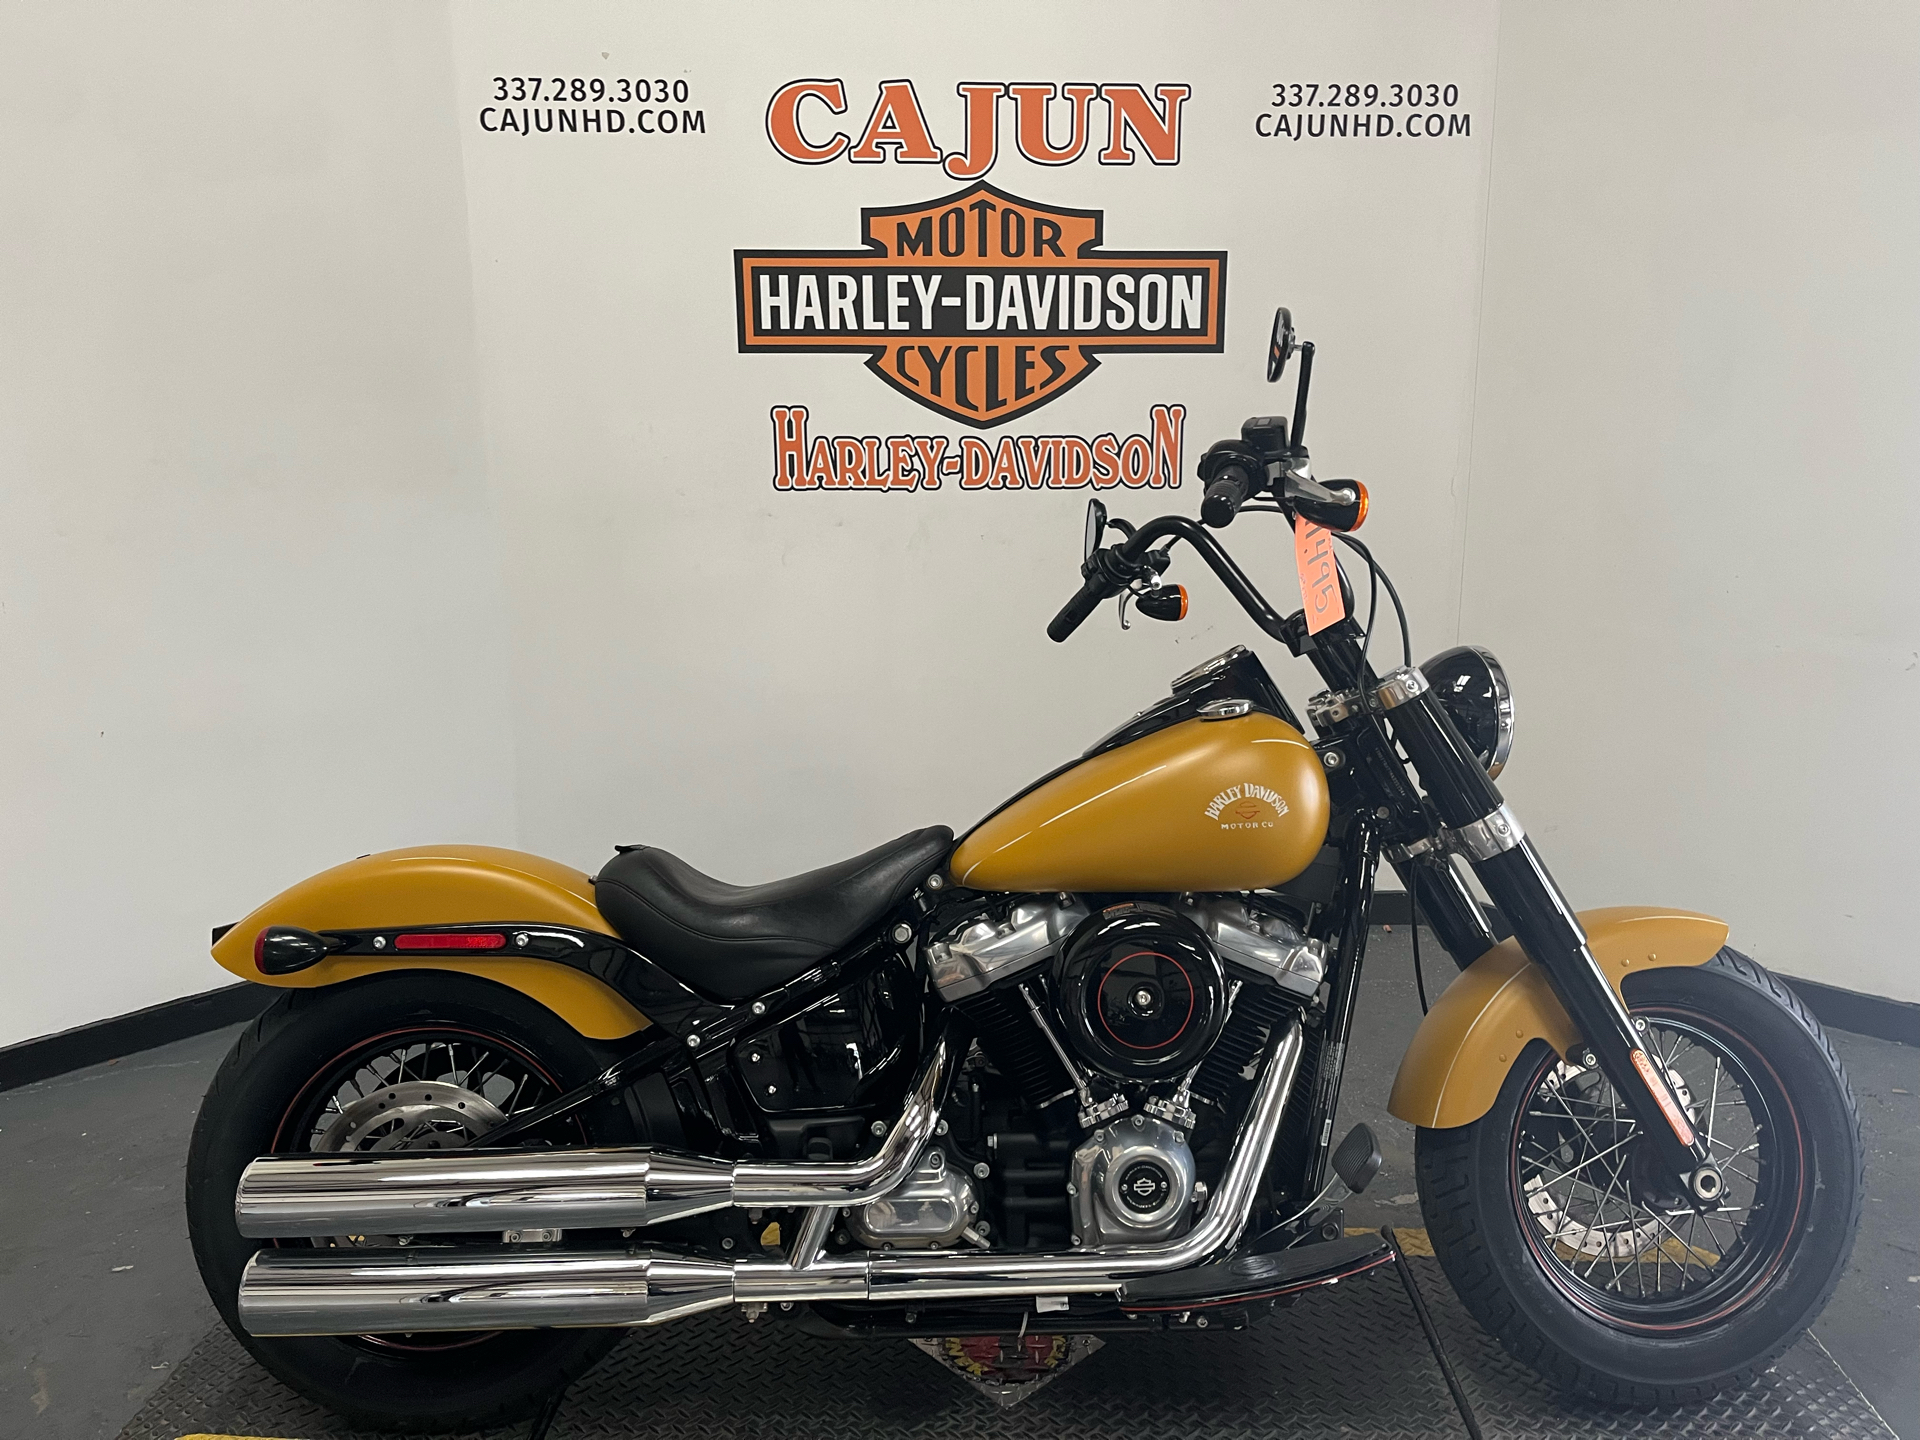 2019 Harley-Davidson Softail Slim® in Scott, Louisiana - Photo 1